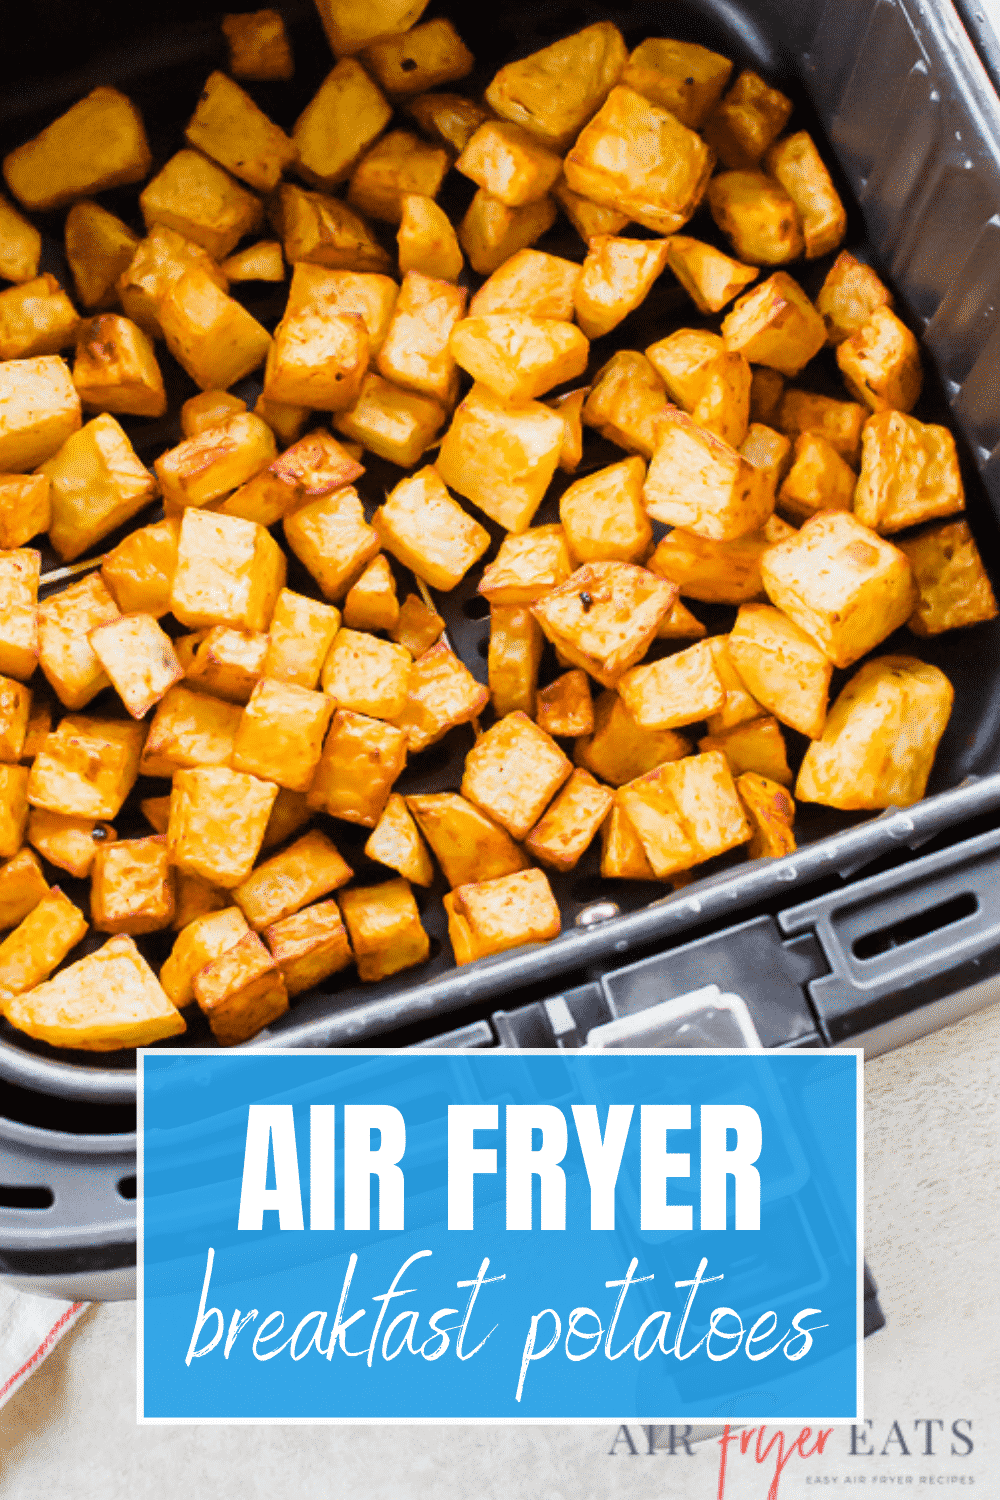 air fryer breakfast potatoes (cooked) in an air fryer basket.